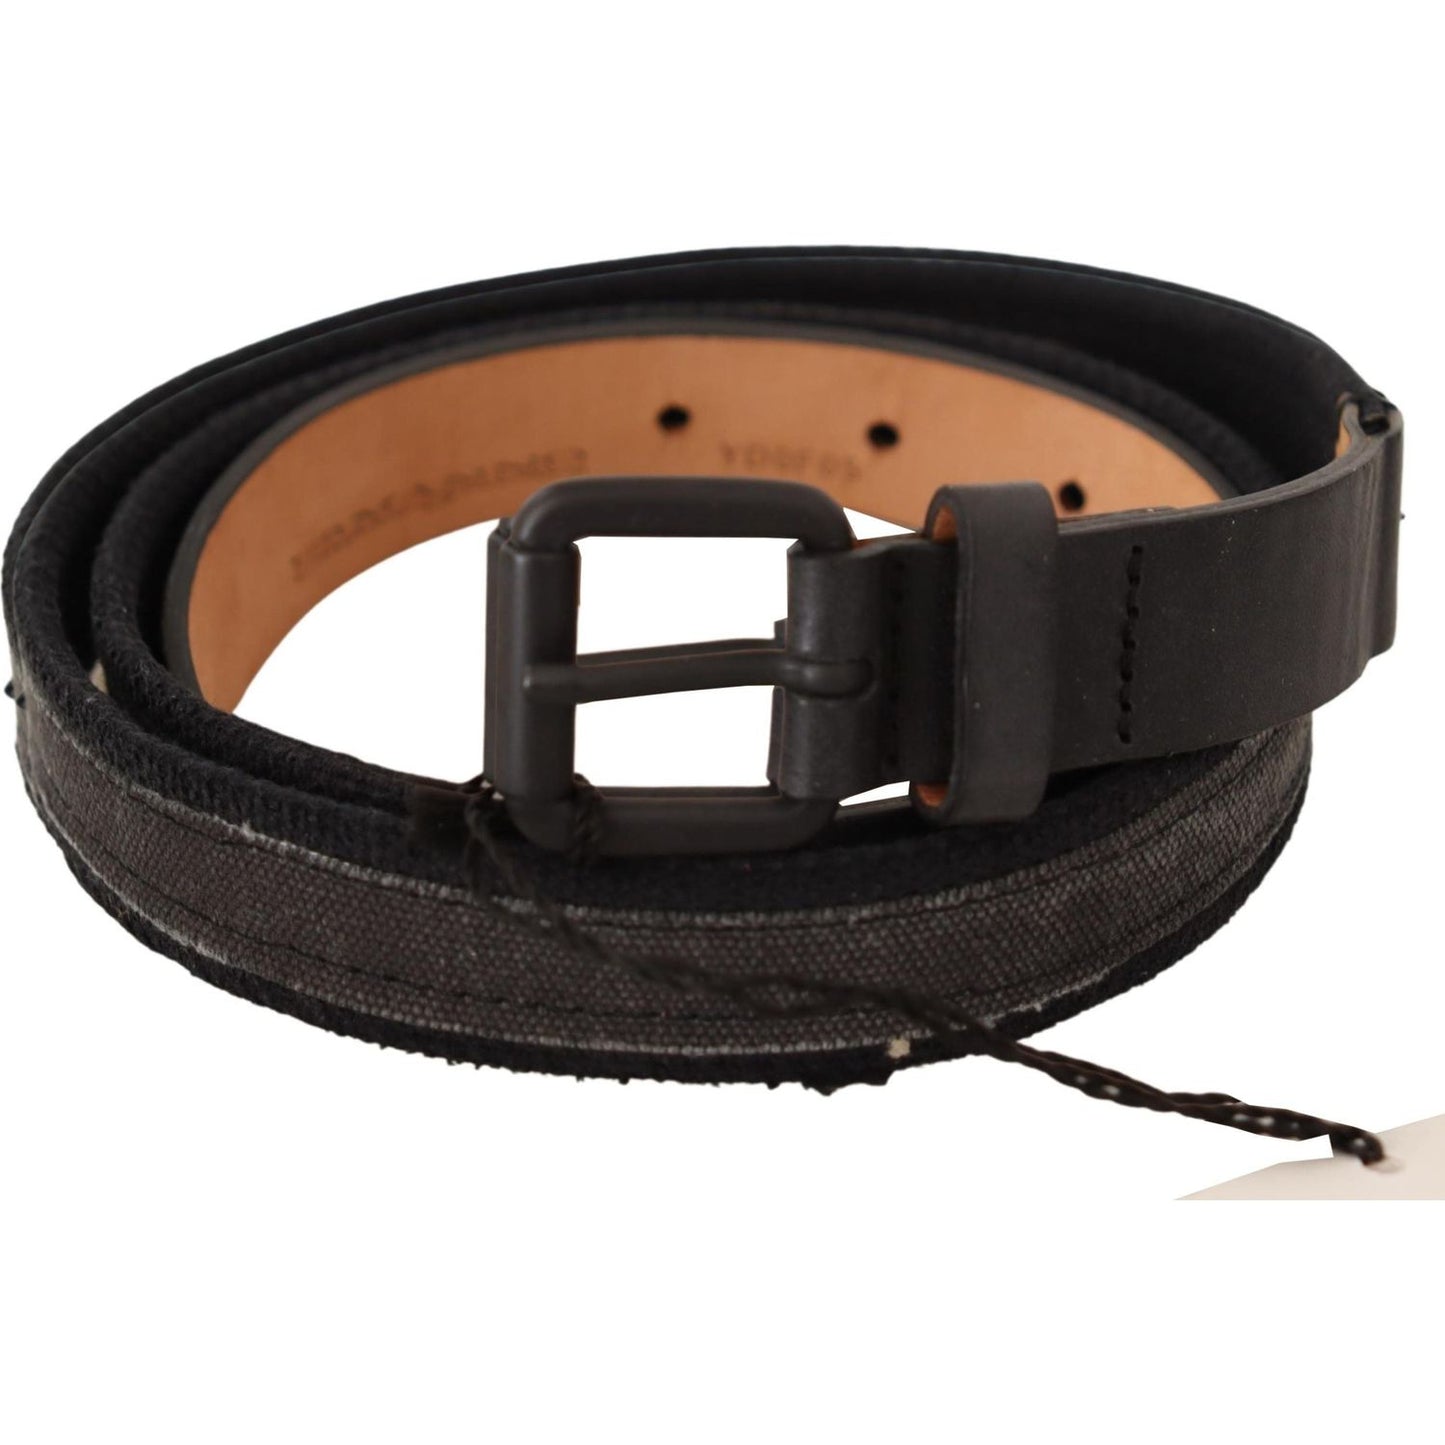 Ermanno Scervino Classic Black Leather Belt with Buckle Fastening black-leather-logo-buckle-waist-women-belt